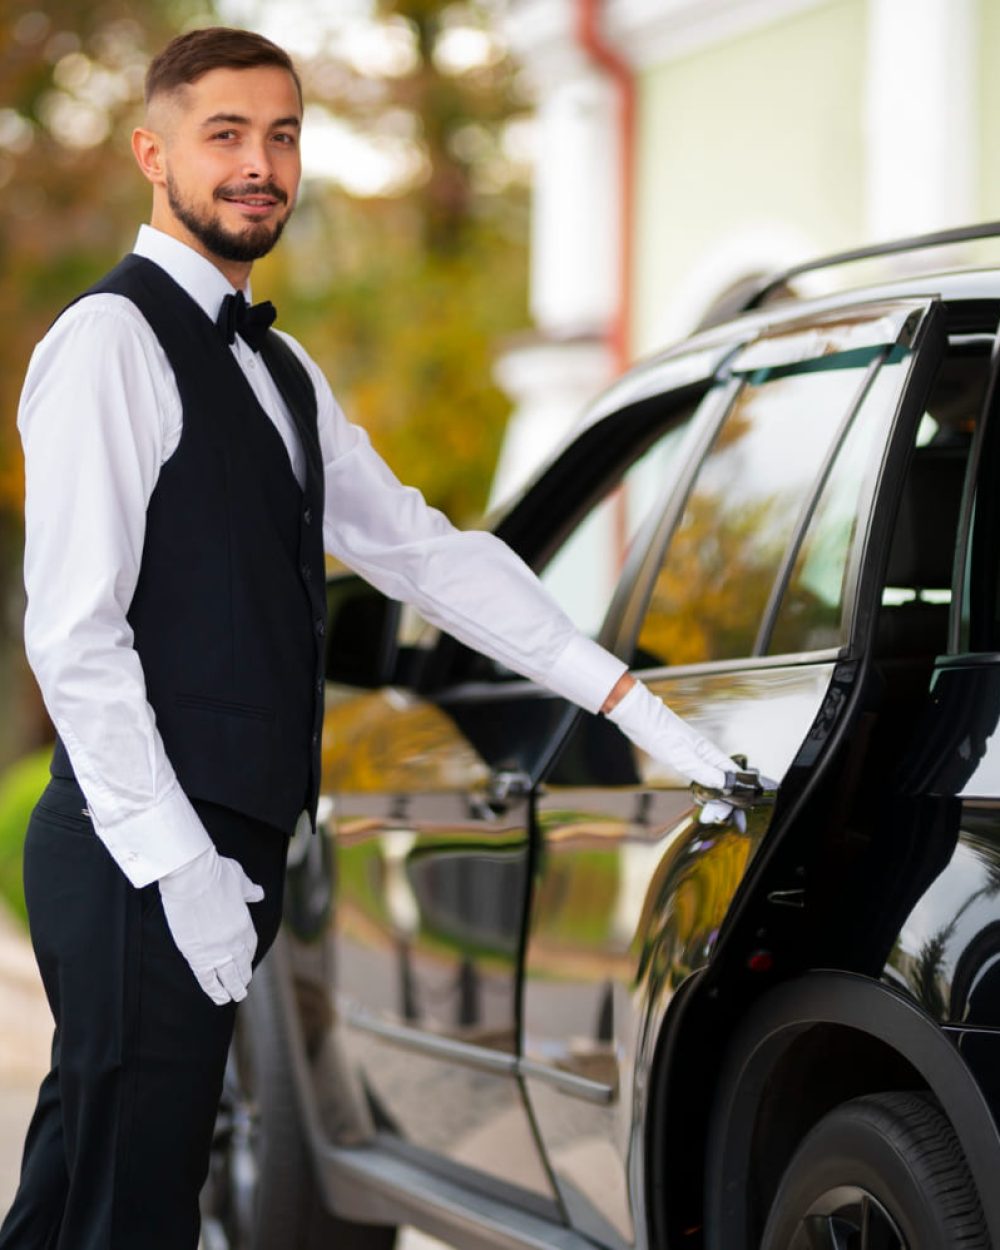 parking-valet-taking-care-customer-vehicle (1)